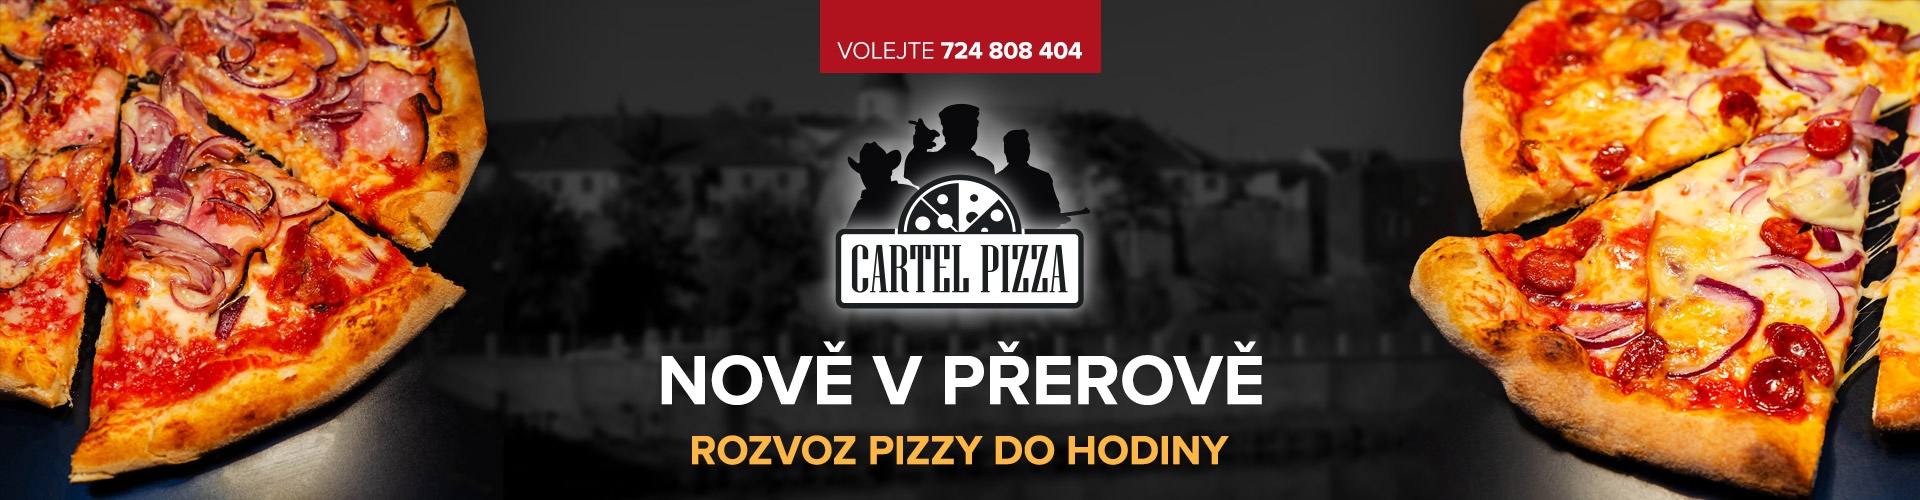 Rozvoz pizzy Přerov - Cartel pizza